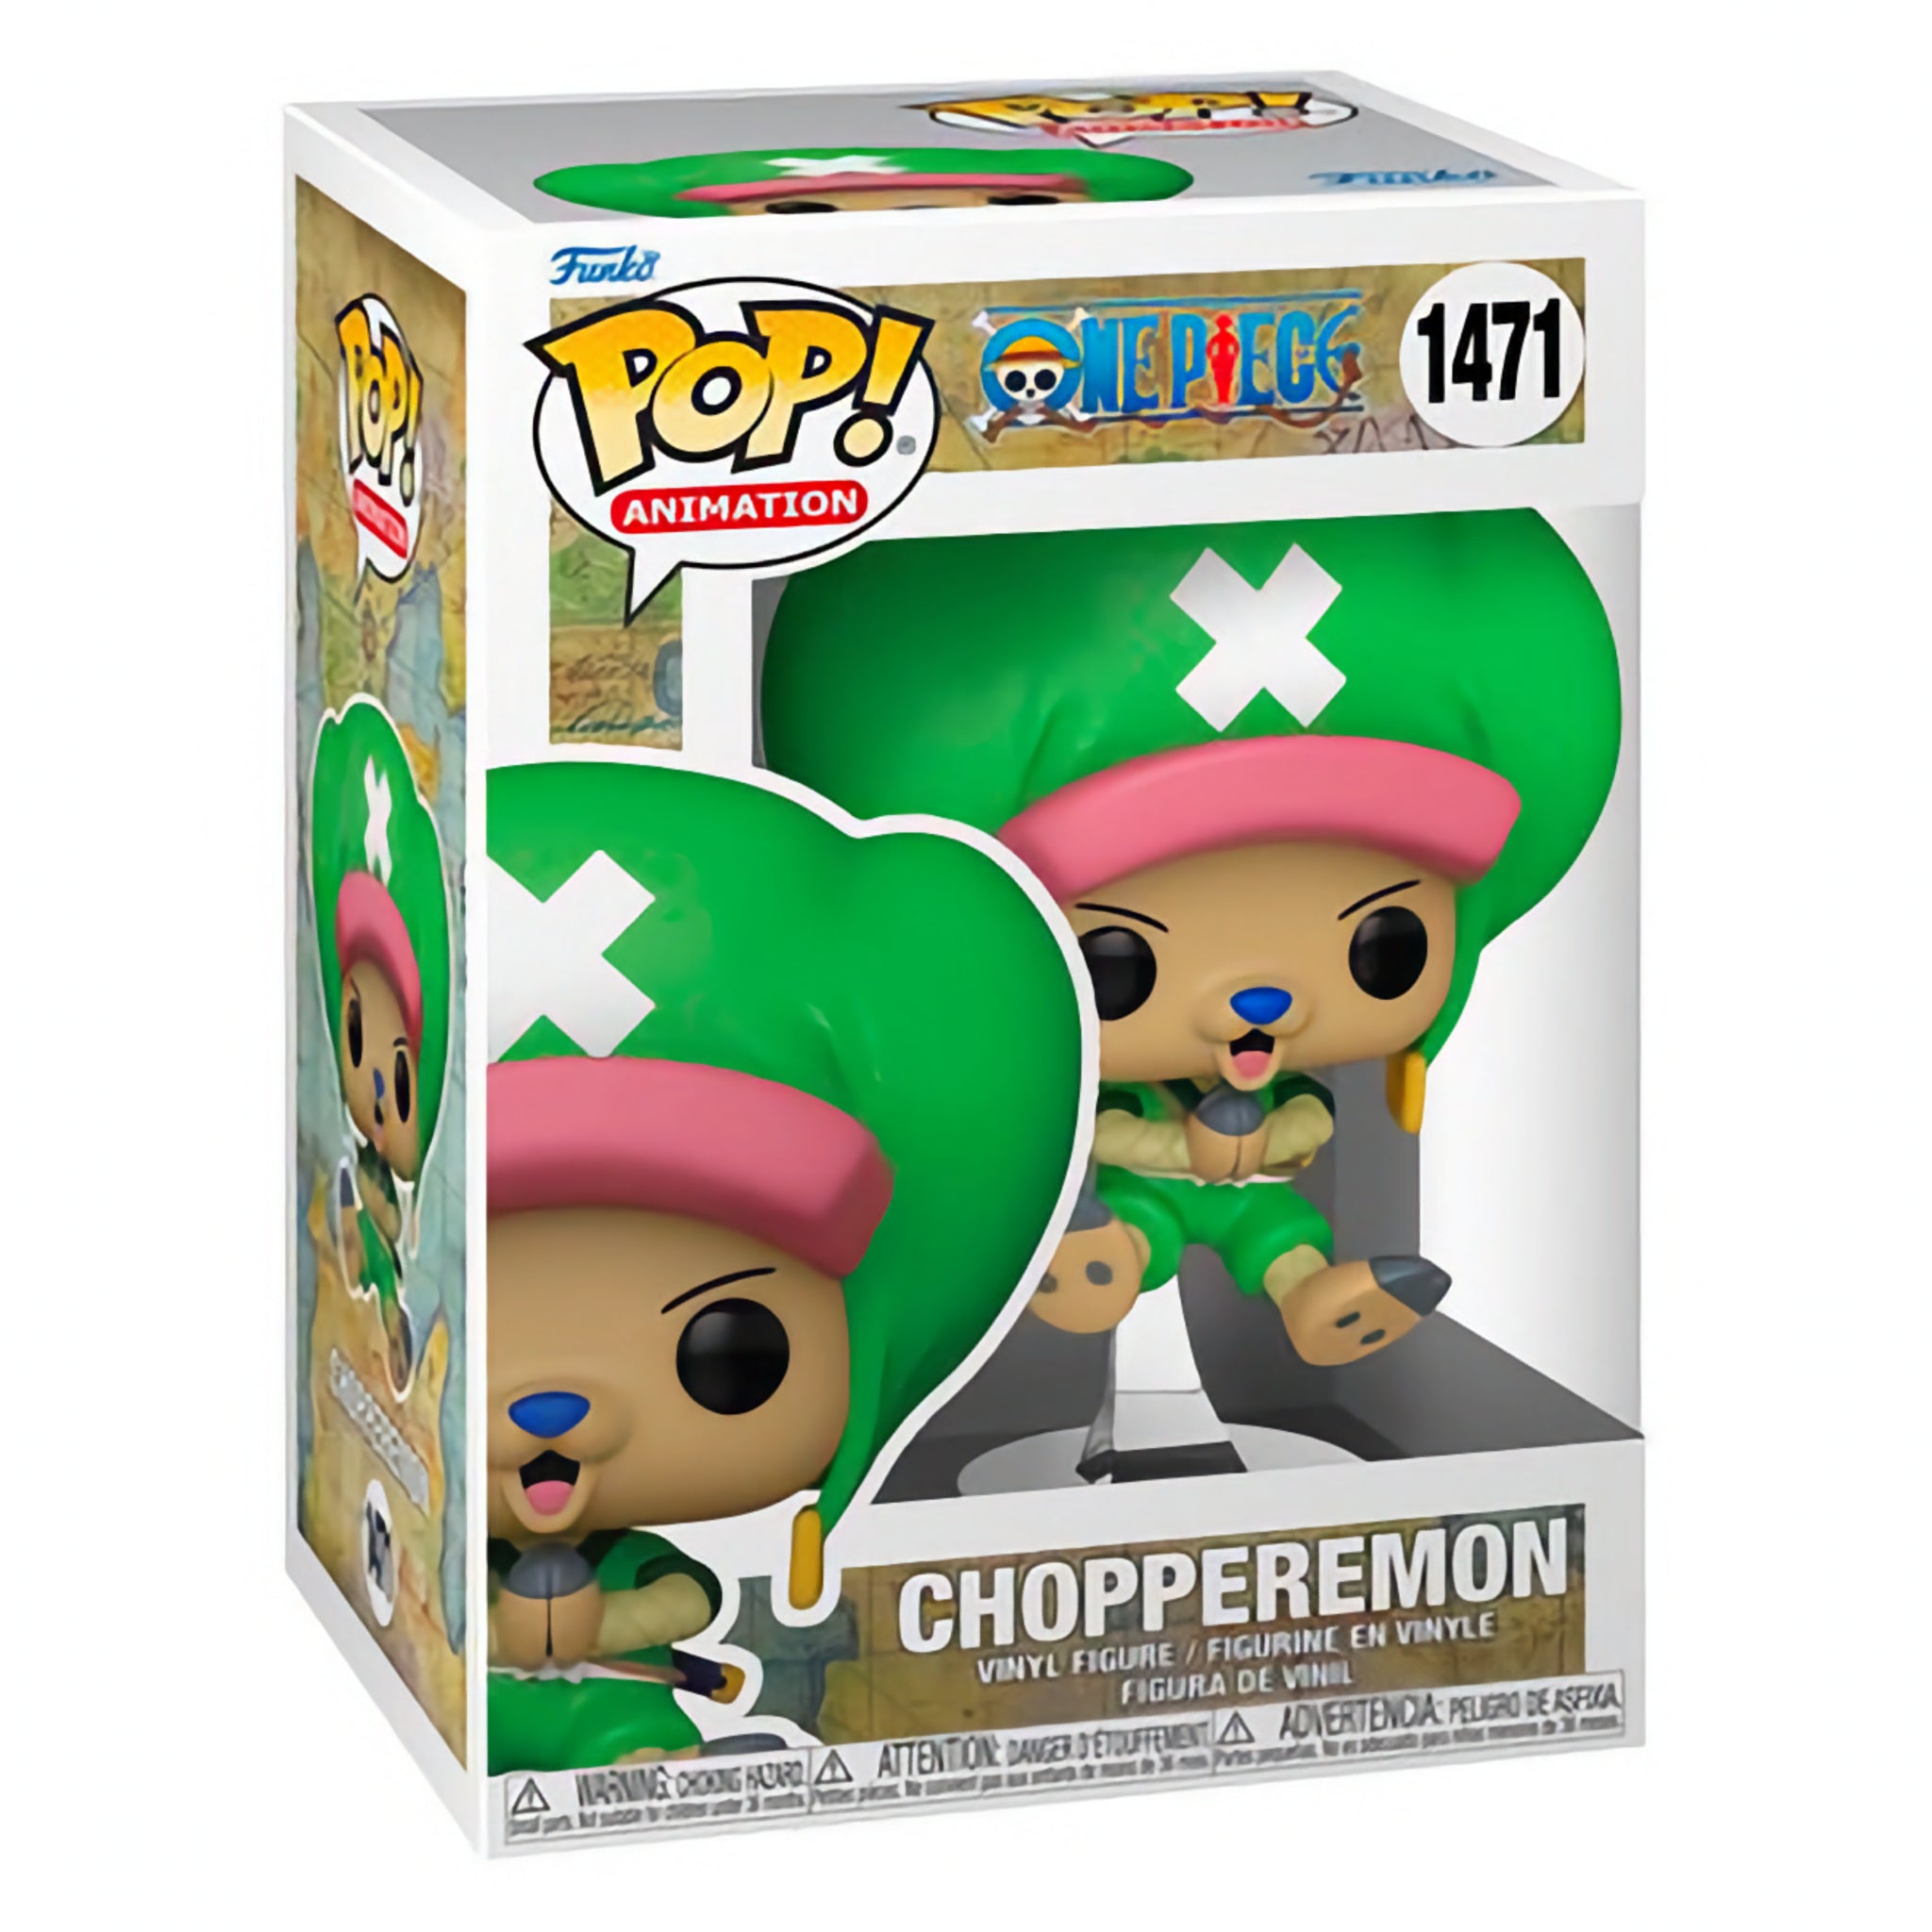 Chopperemon Funko Pop!